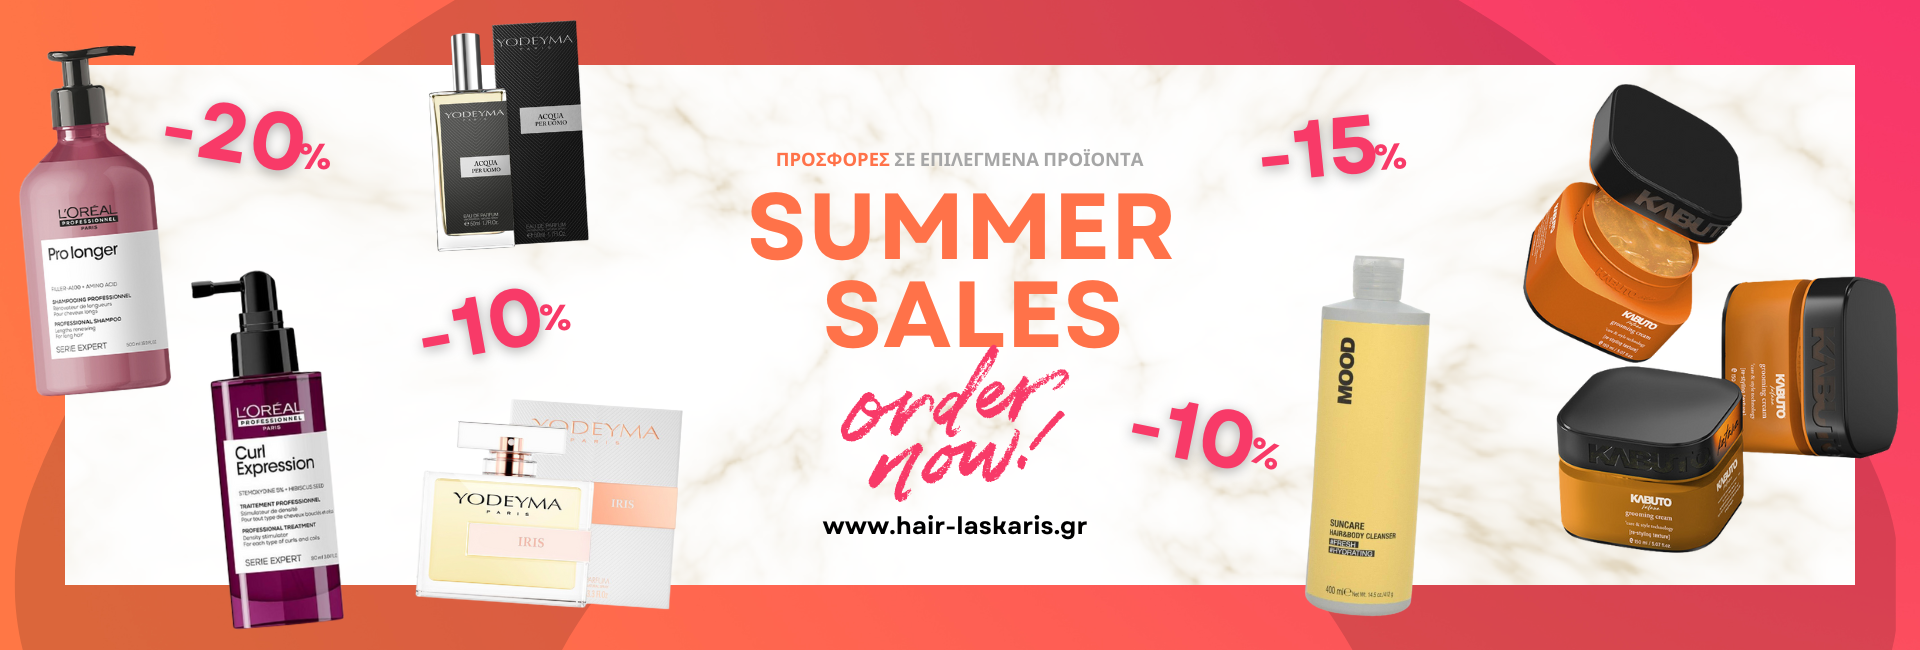 summer sales hair-askaris.gr